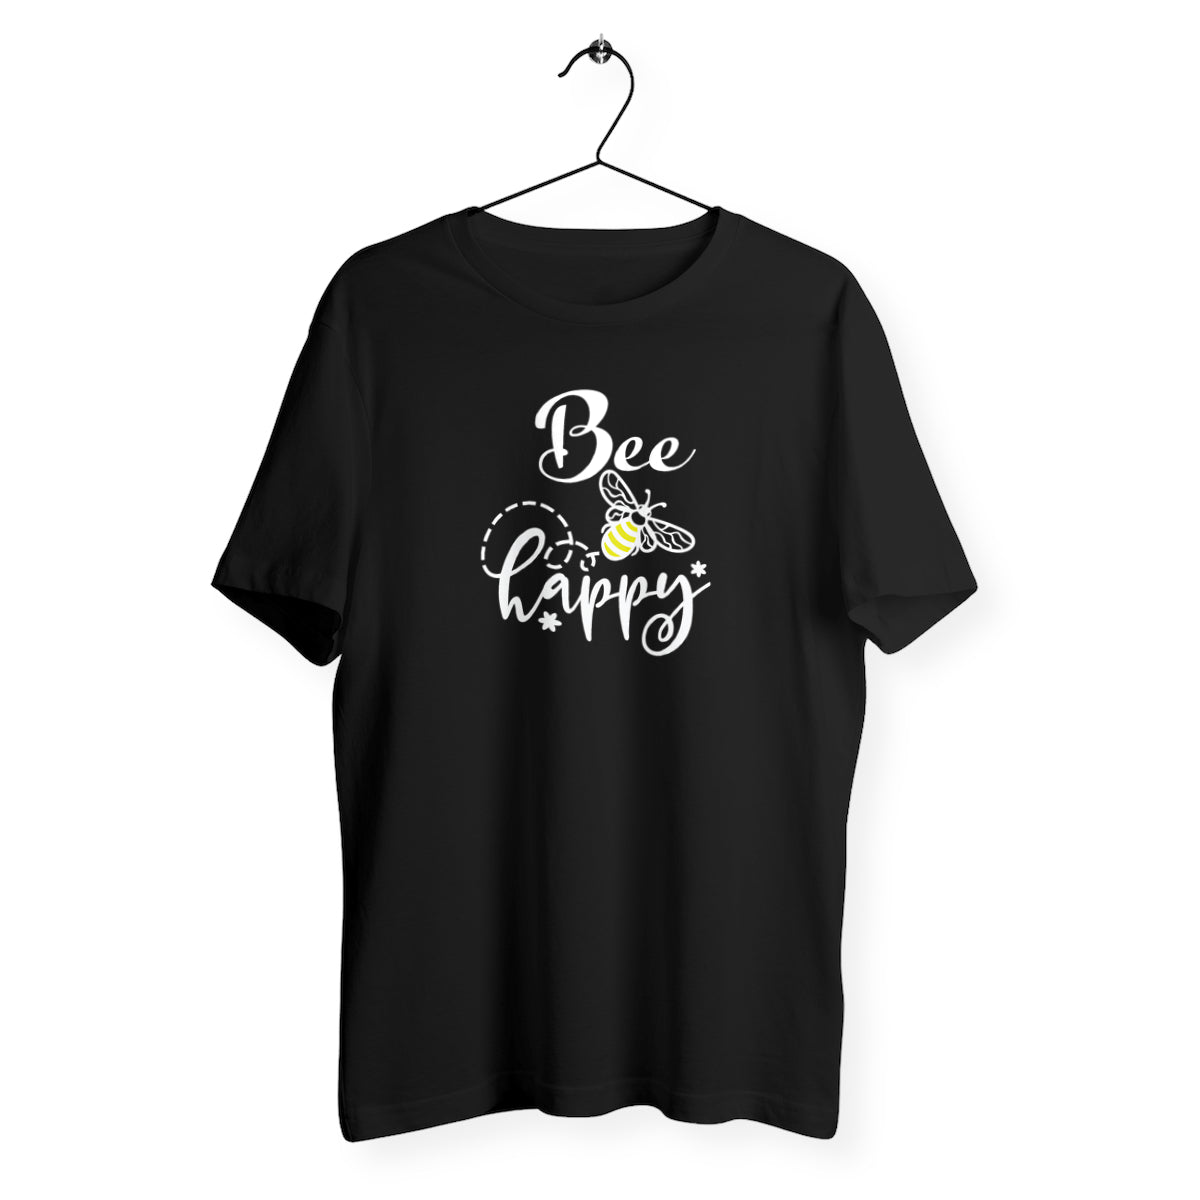 T-Shirt Mixte Bio - Bee Happy (blanc), t-shirt bio mixte Bee Happy de t-franch, t-shirt bee happy, t-shirt abeille en coton bio, tee shirt mixte jeux de mots, t-shirt be happy avec guêpe, t-shirt homme et femme bee happy, t-shirt bee happy noir